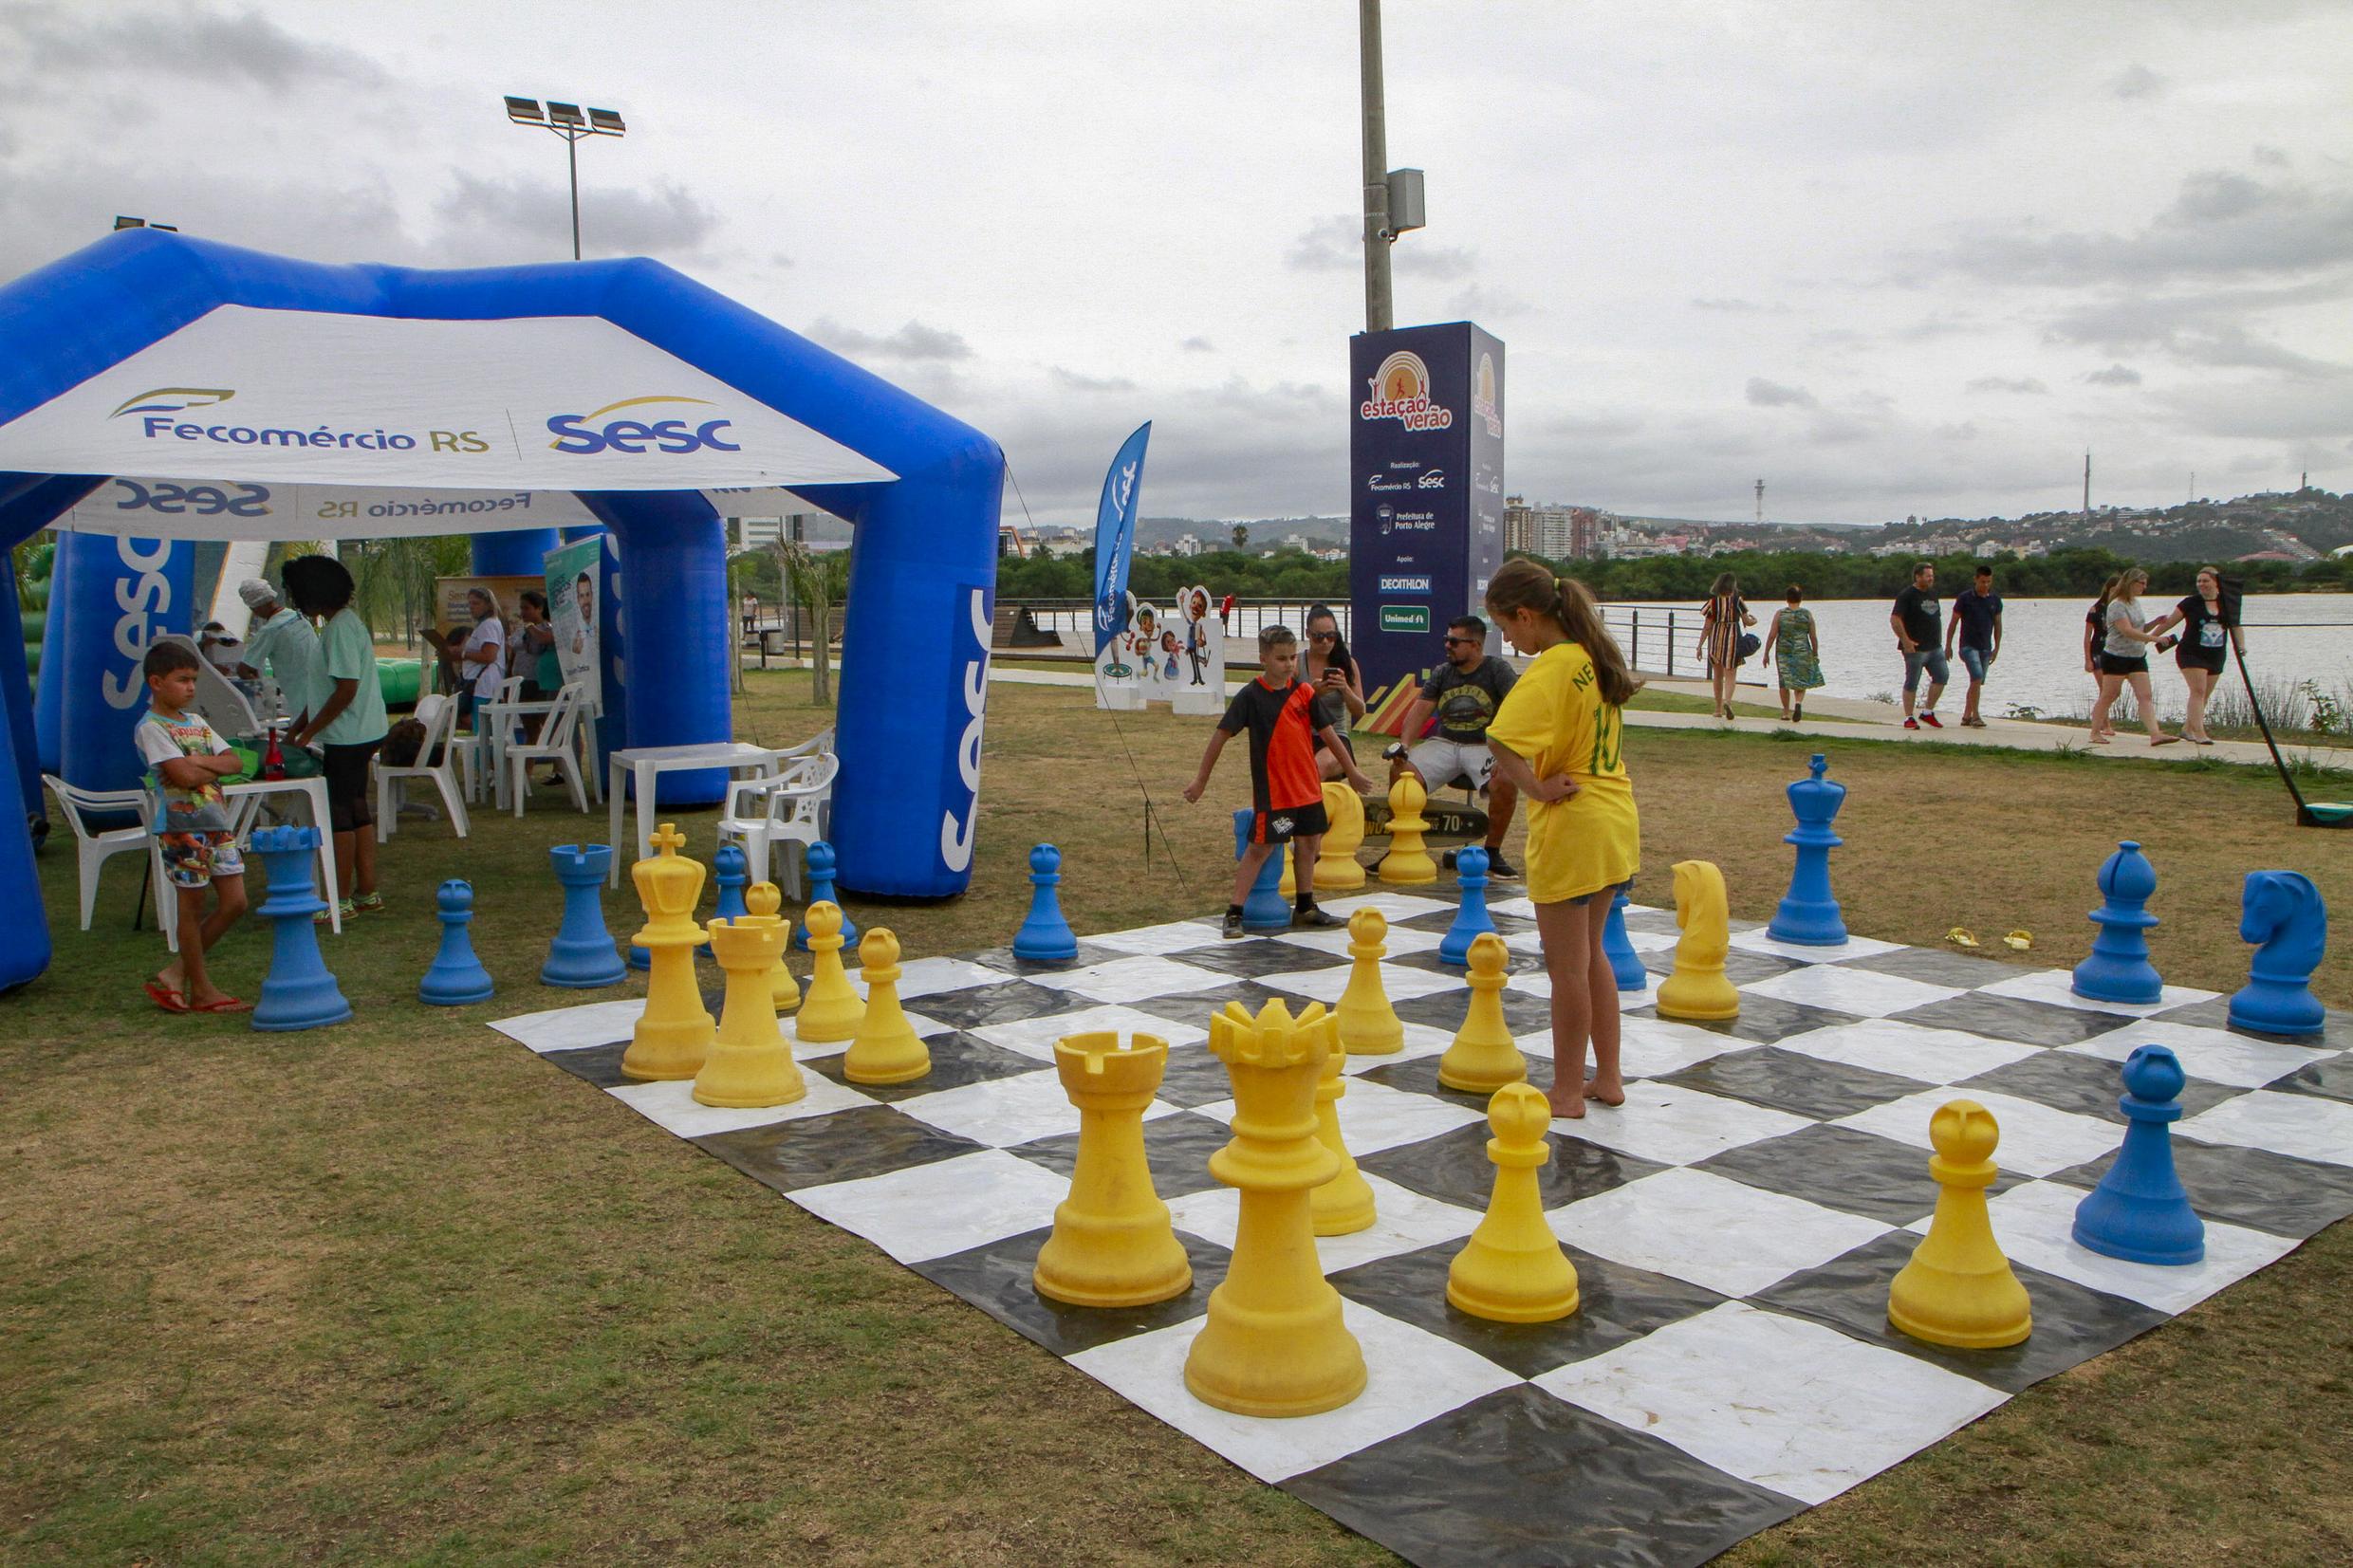 Xadrez em Porto Alegre